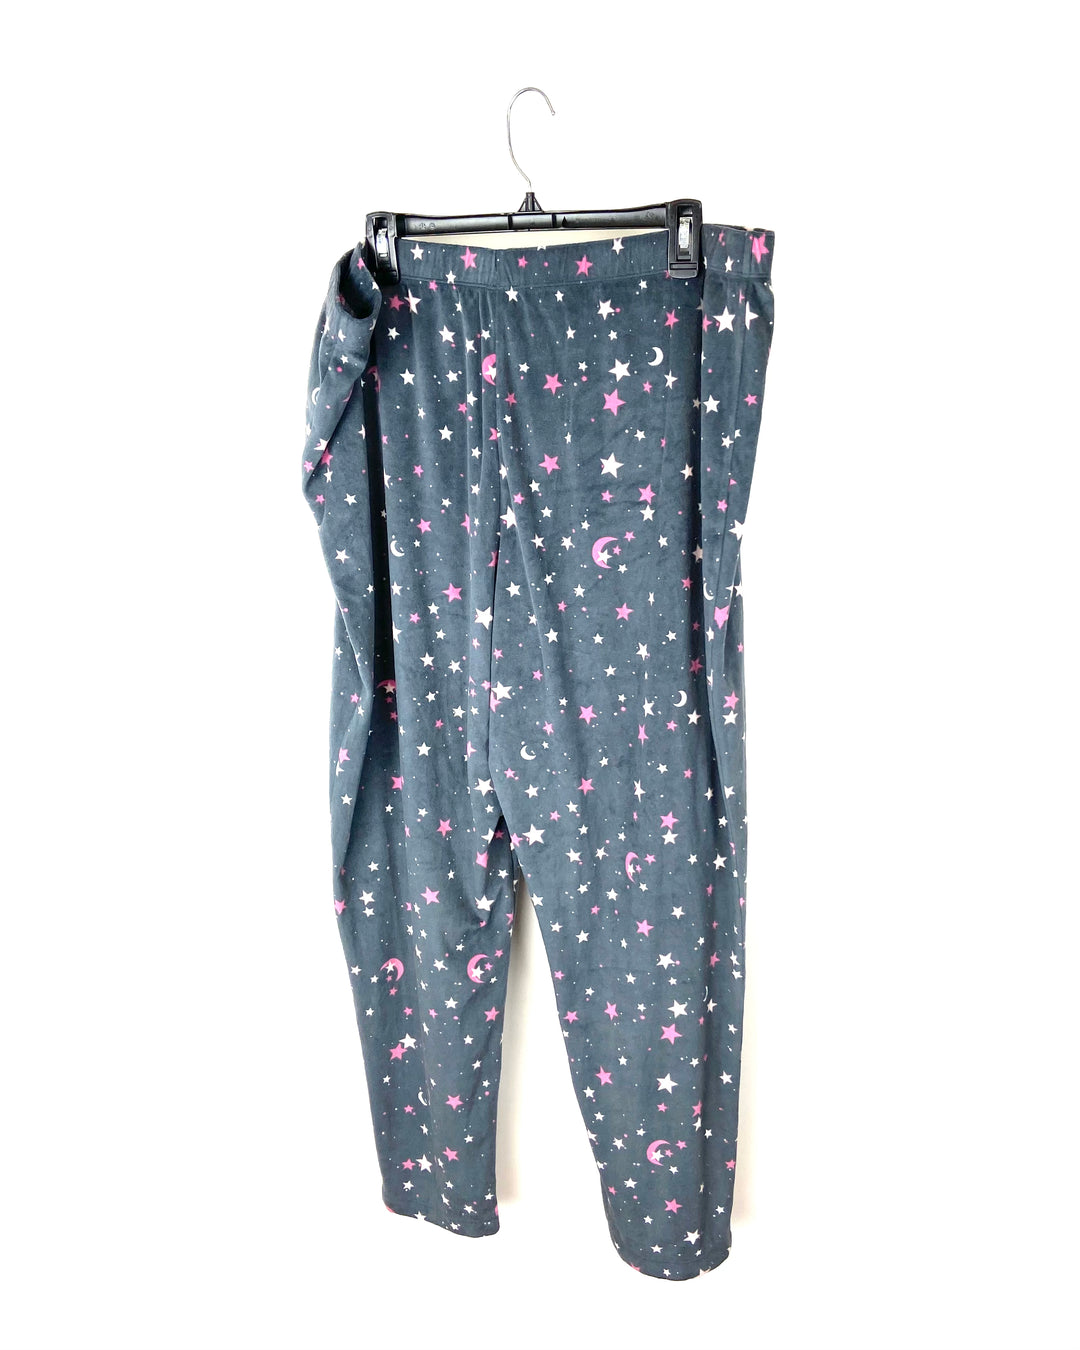 Grey Star and Moon Pajama Pants - 2X